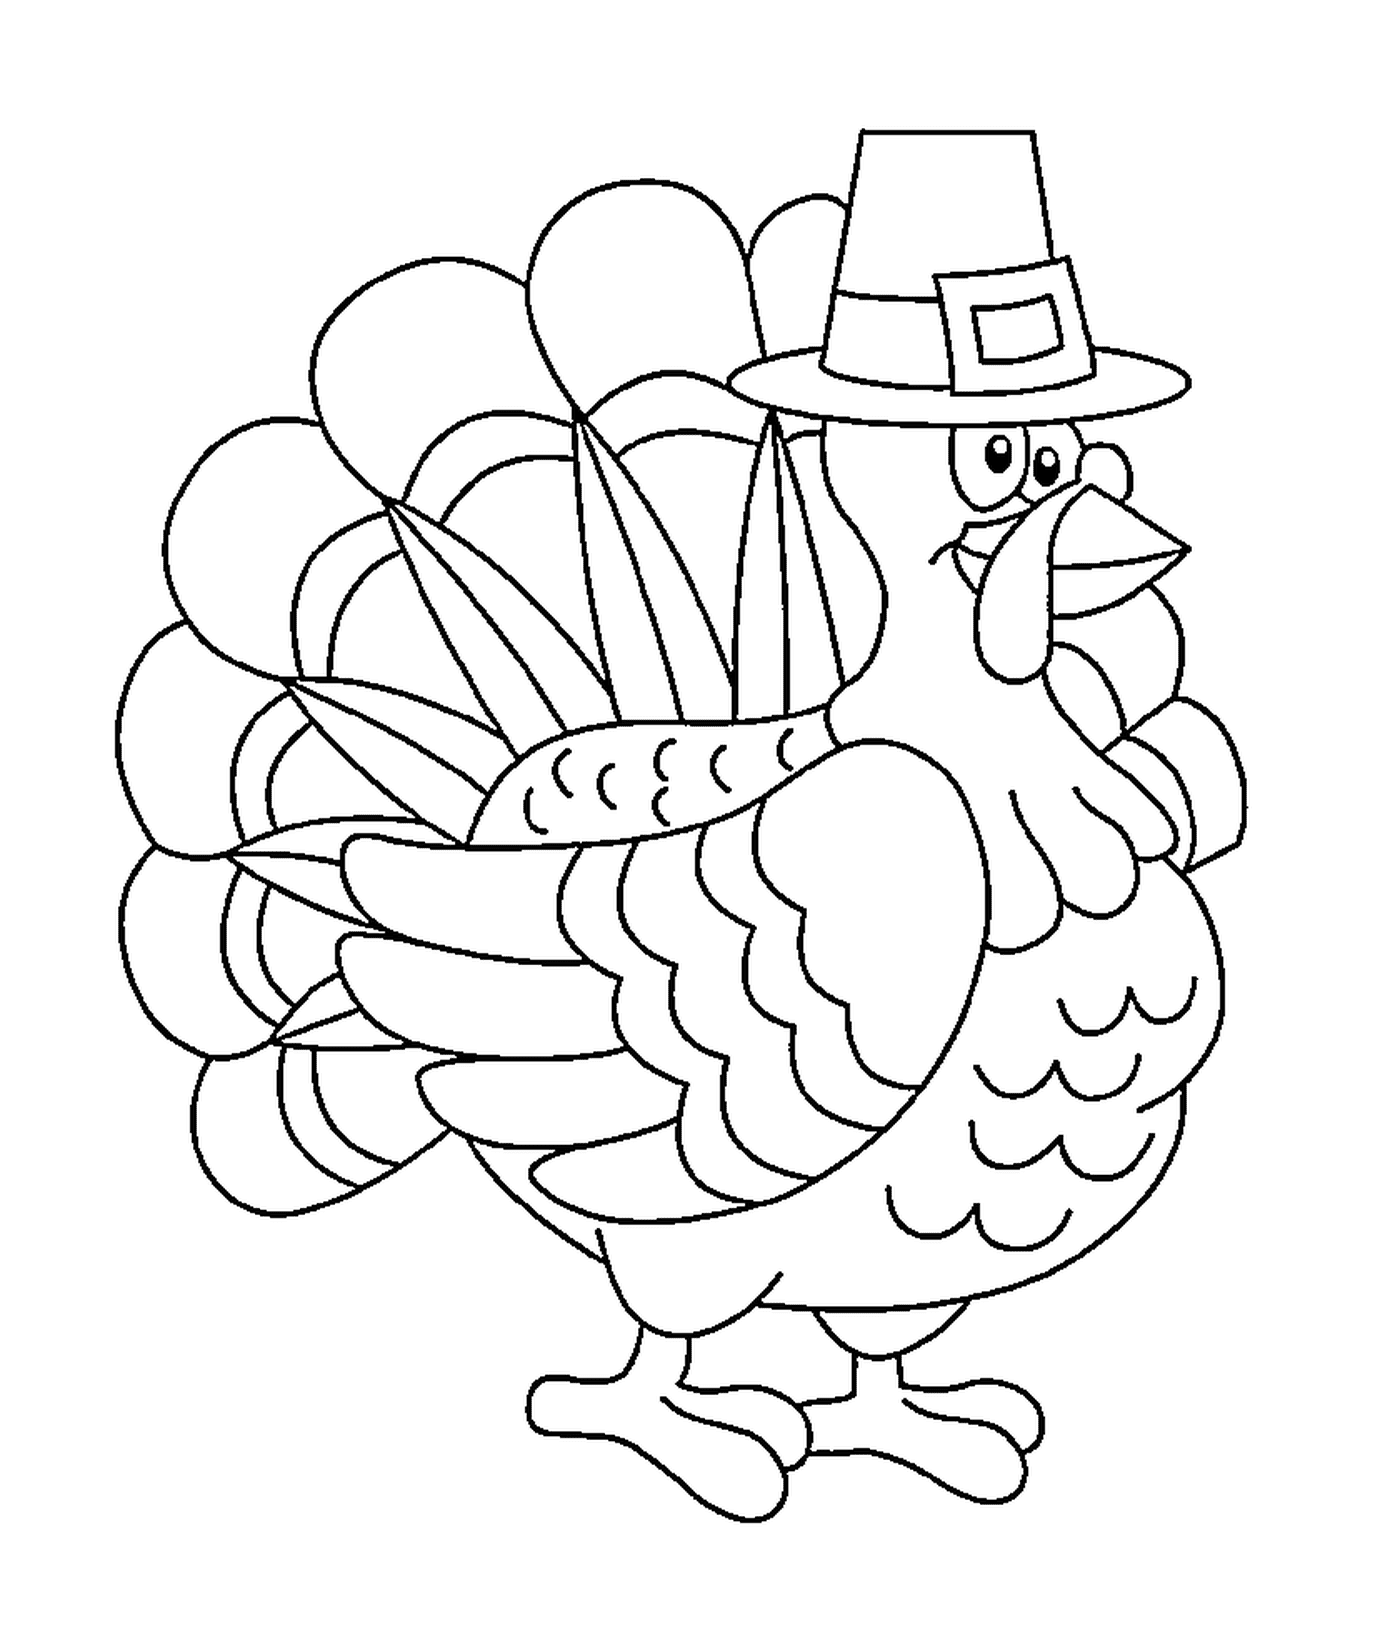  A turkey wearing a pilgrim's hat 